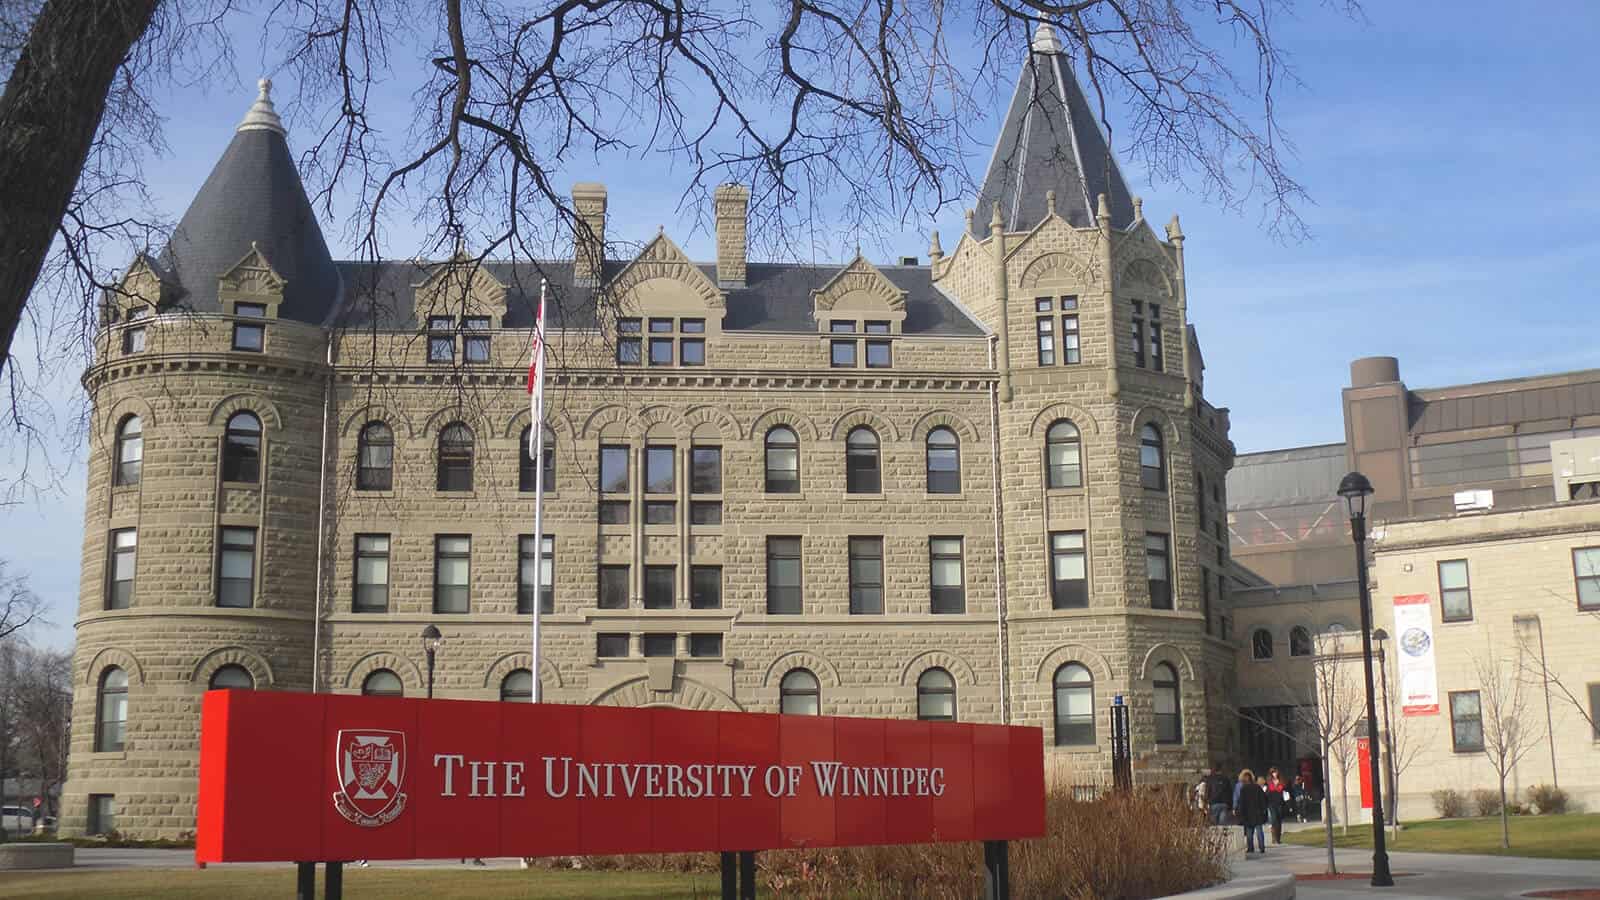 University of Winnipeg
